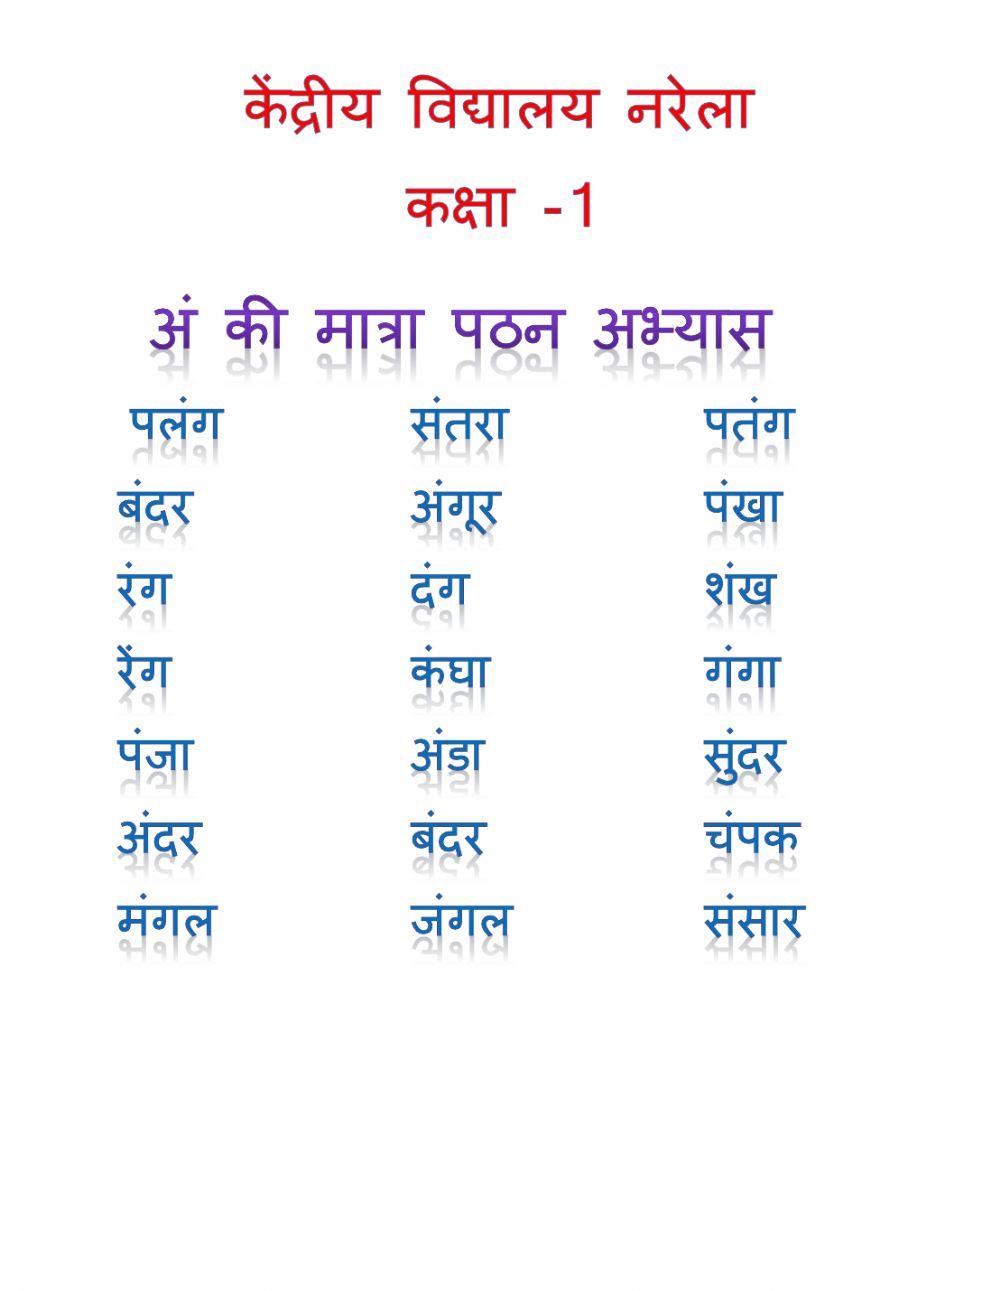 Hindi reading an ki matraa